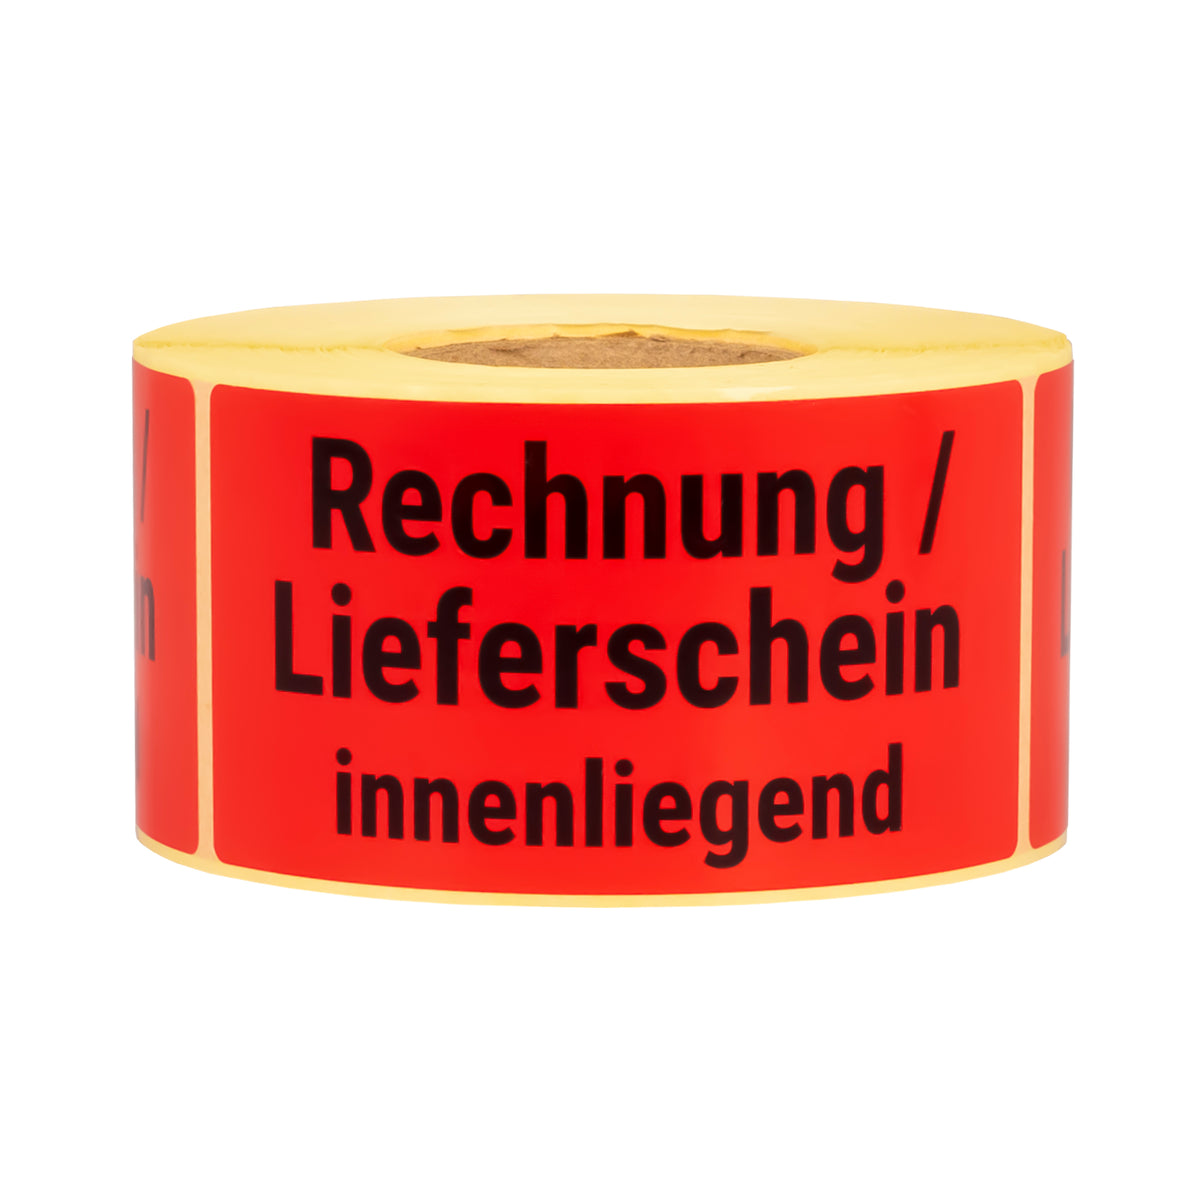 Warning Labels on Roll 100 x 50 mm Rechnung/Lieferschein innenliegend 500 pcs